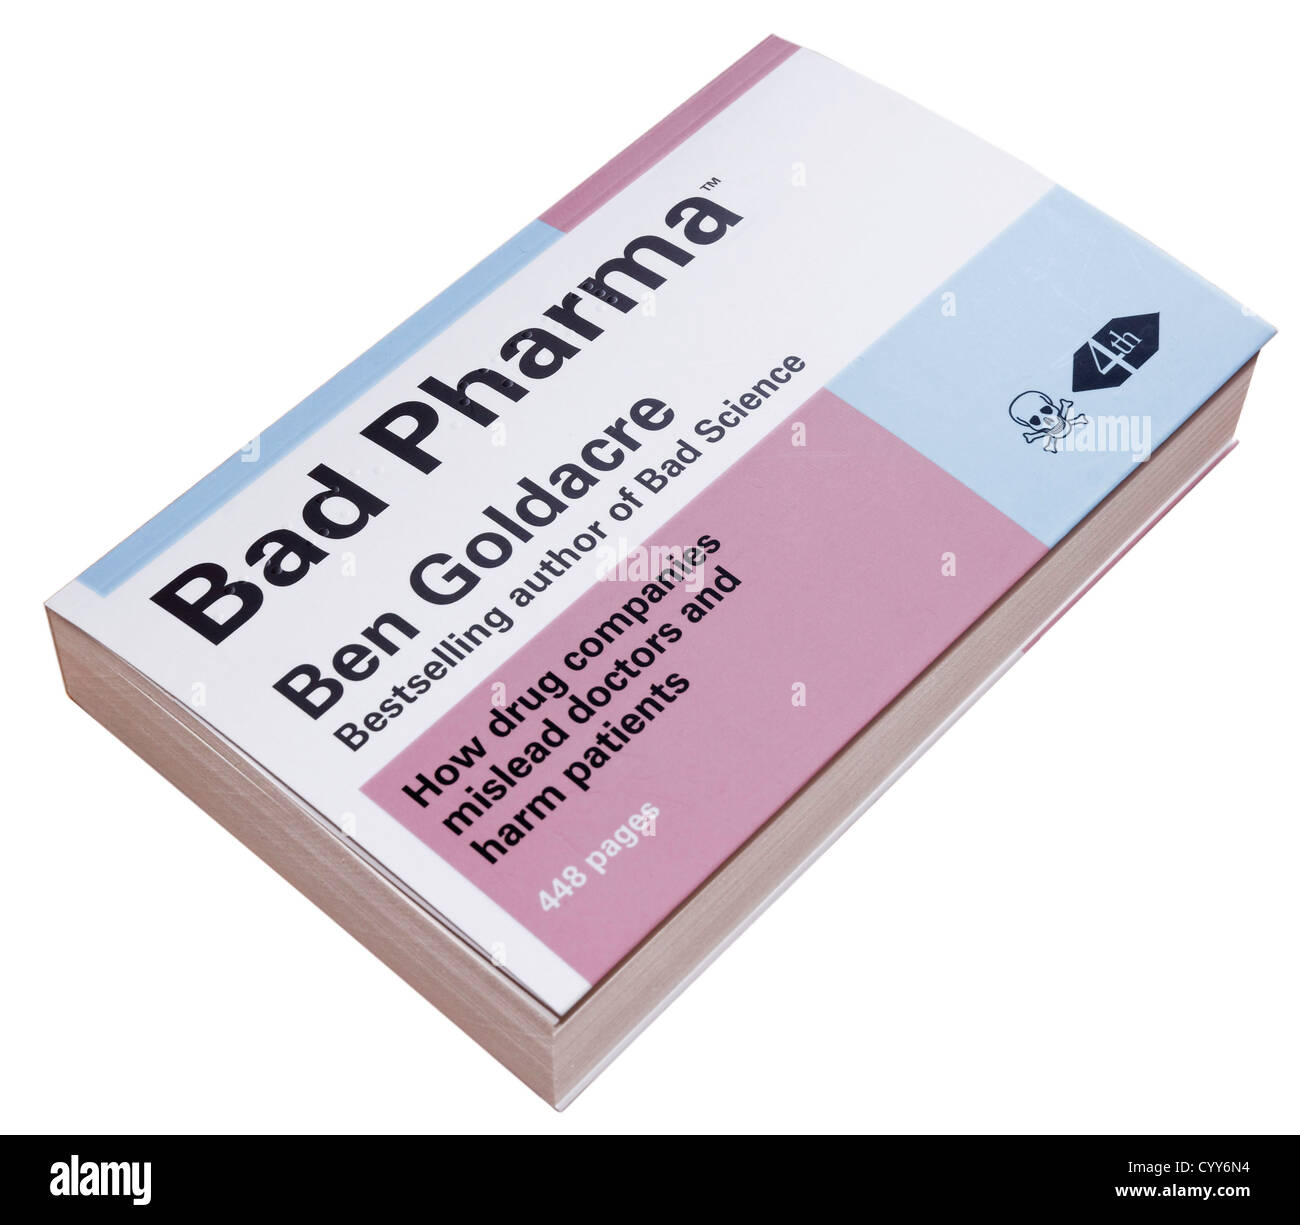 Bad Pharma by Ben Goldacre Stock Photo